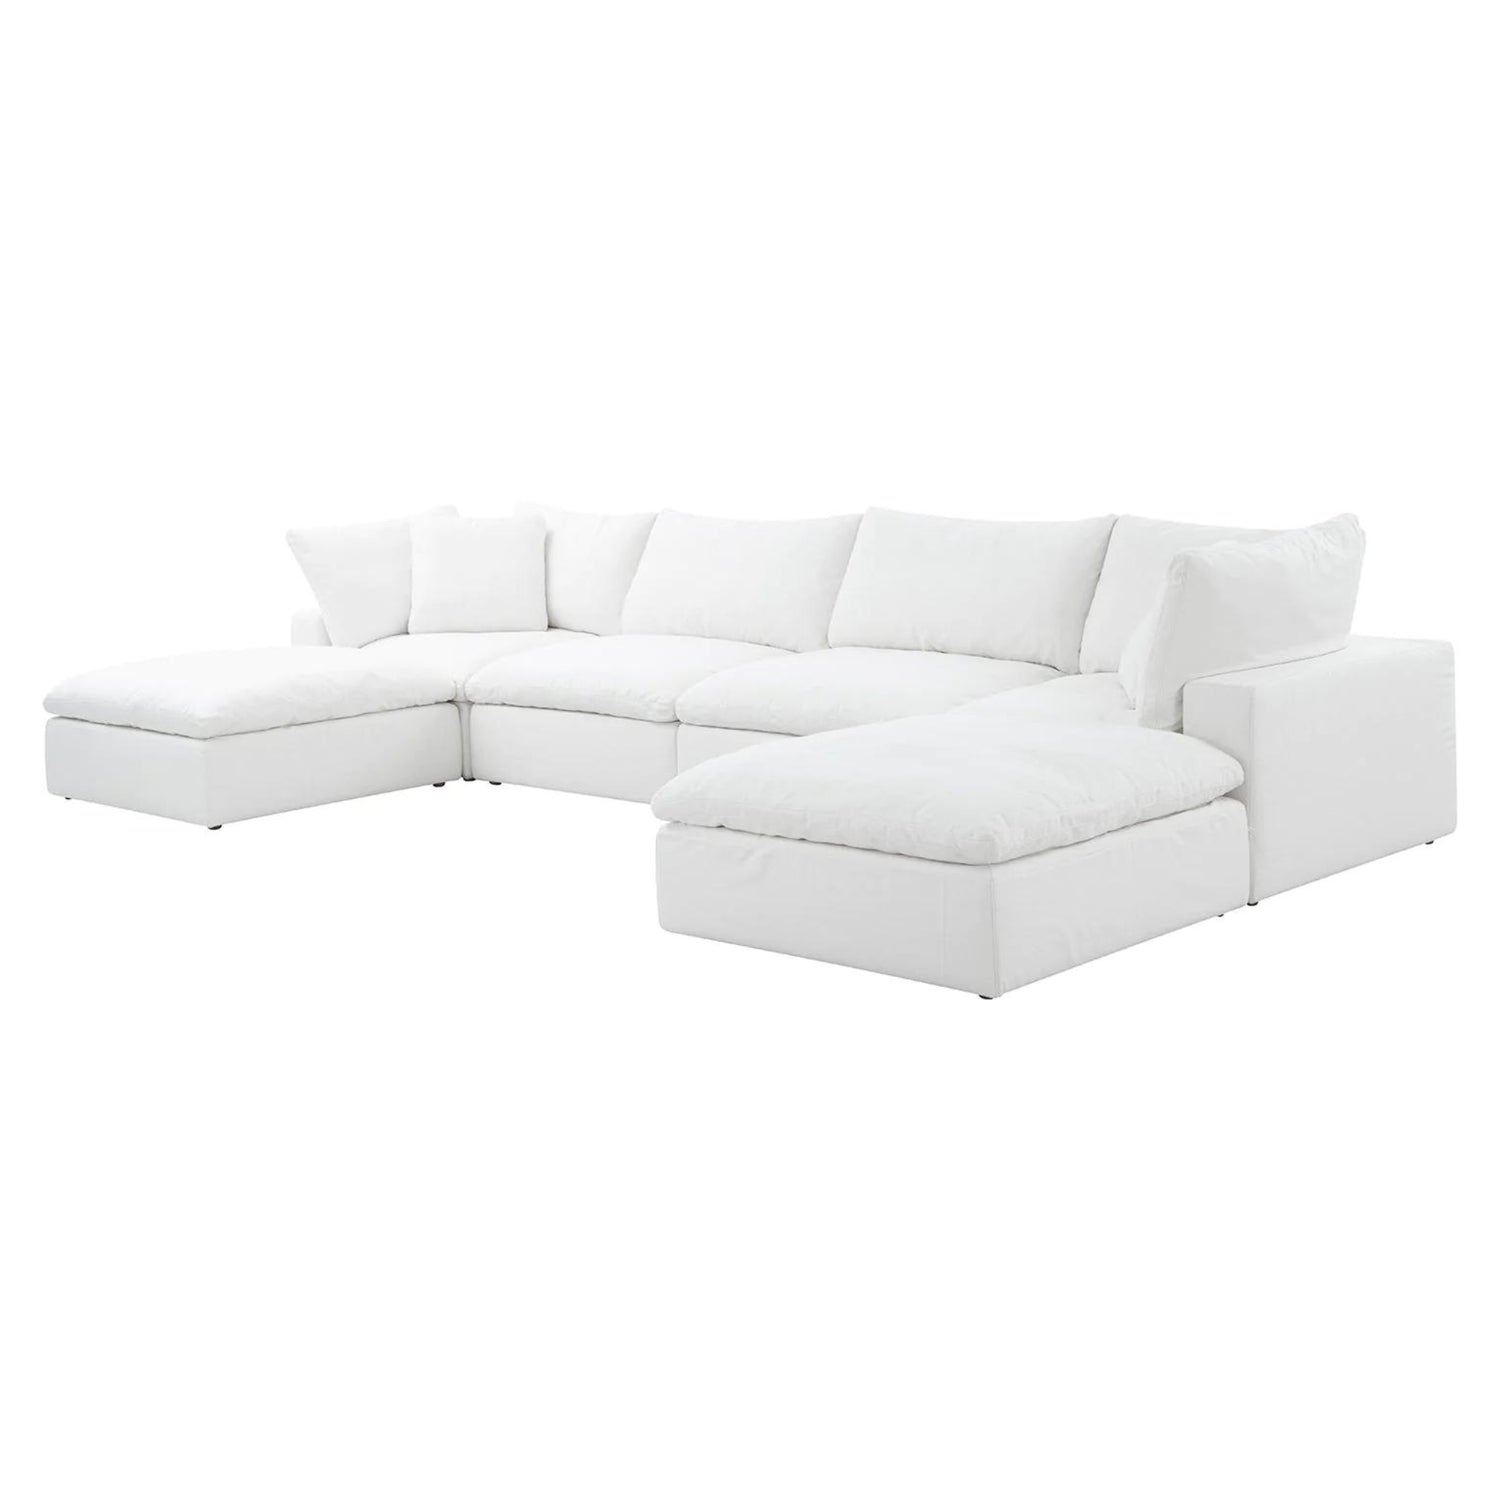 komfi-6-piece-modular-sectional-u-shaped-white 